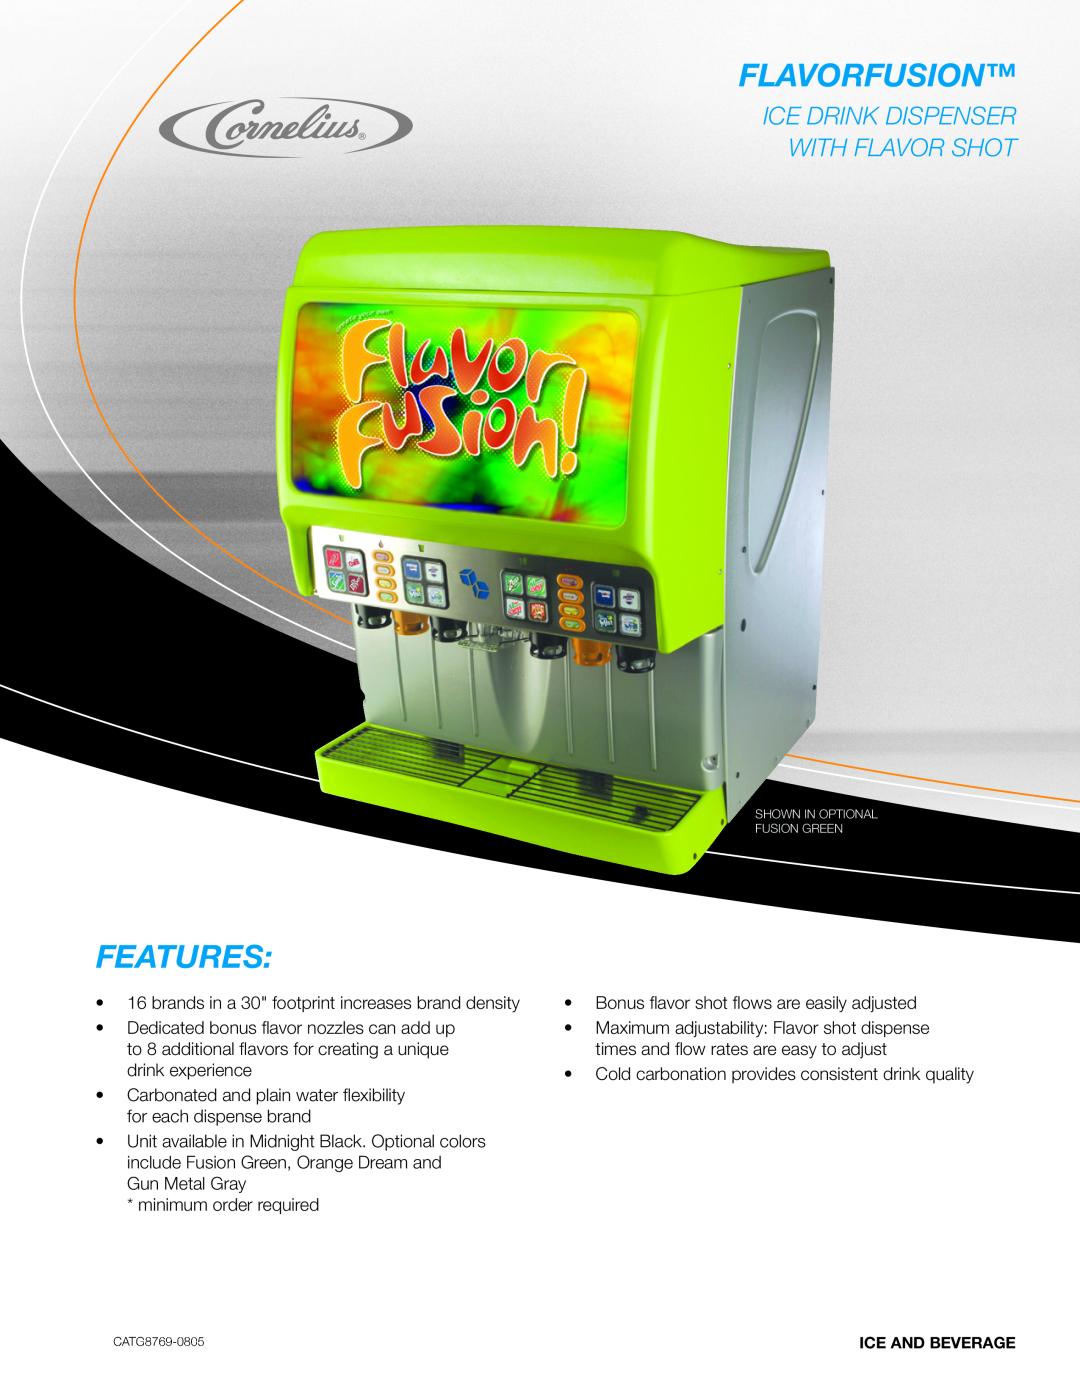 Cornelius Ice Drink Dispenser with Flavor Shot manual Flavorfusion, Features, Ice Drink Dispenser With Flavor Shot 